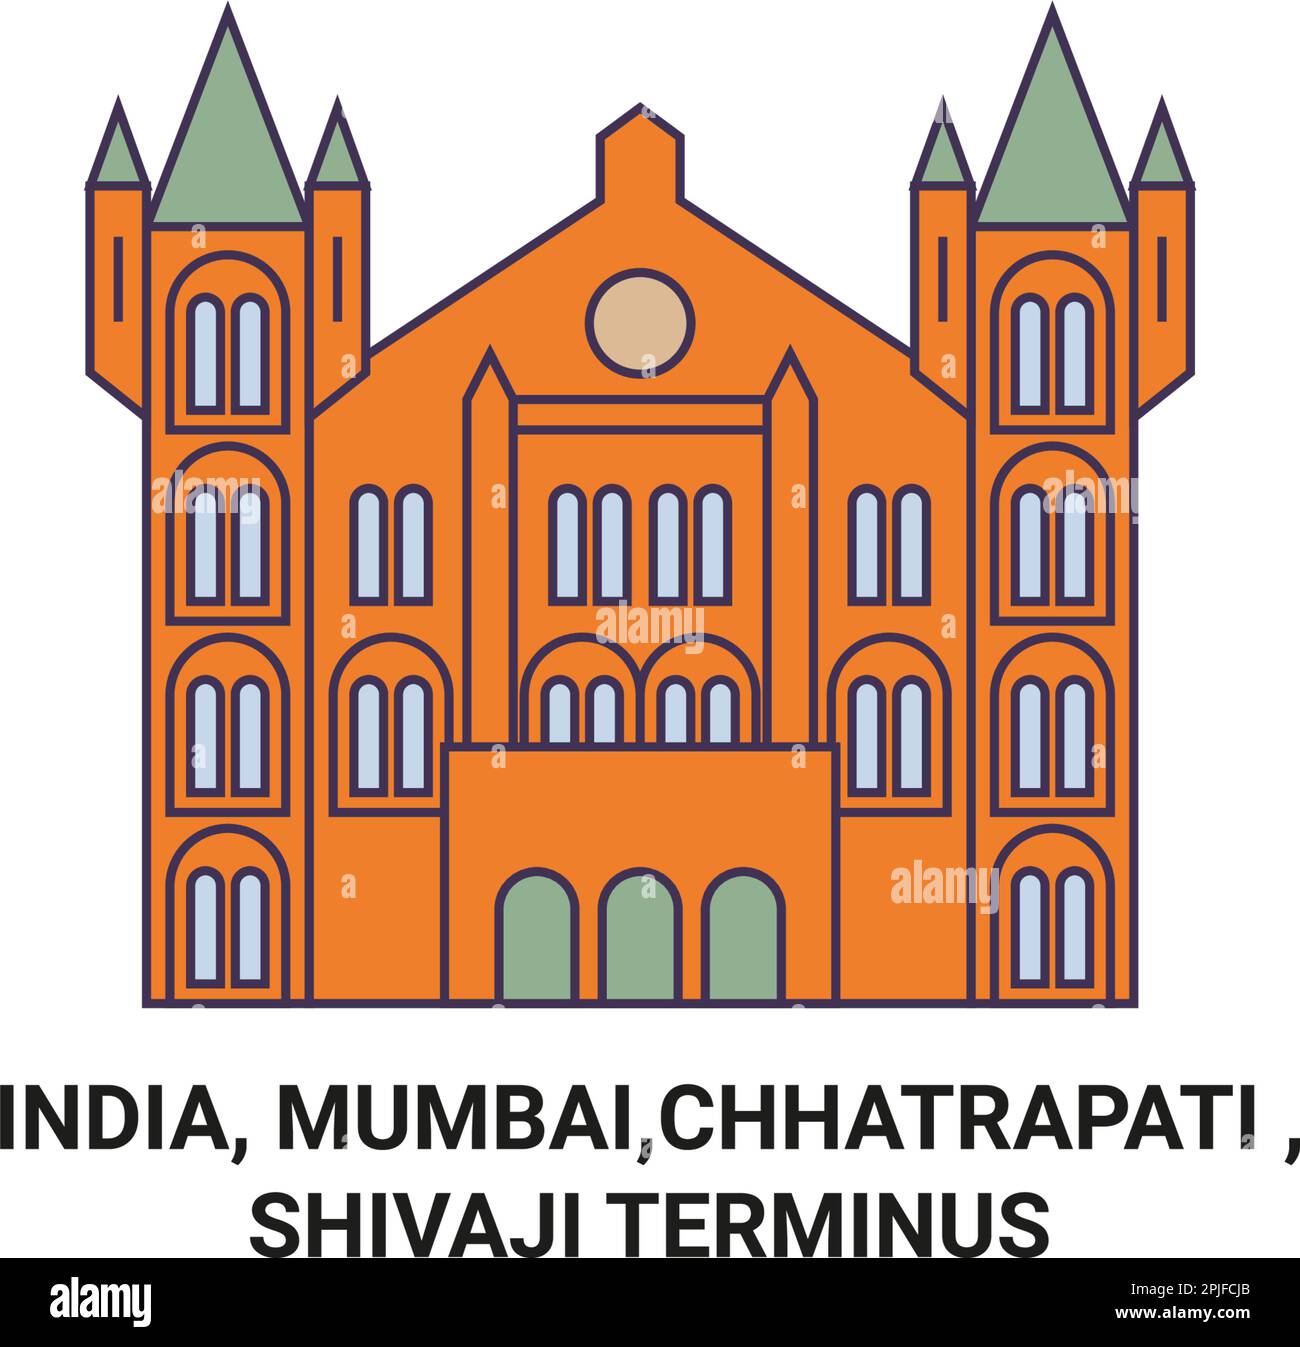 Indien, Mumbai, Chhatrapati, Shivaji Terminus Reise-Wahrzeichen-Vektordarstellung Stock Vektor